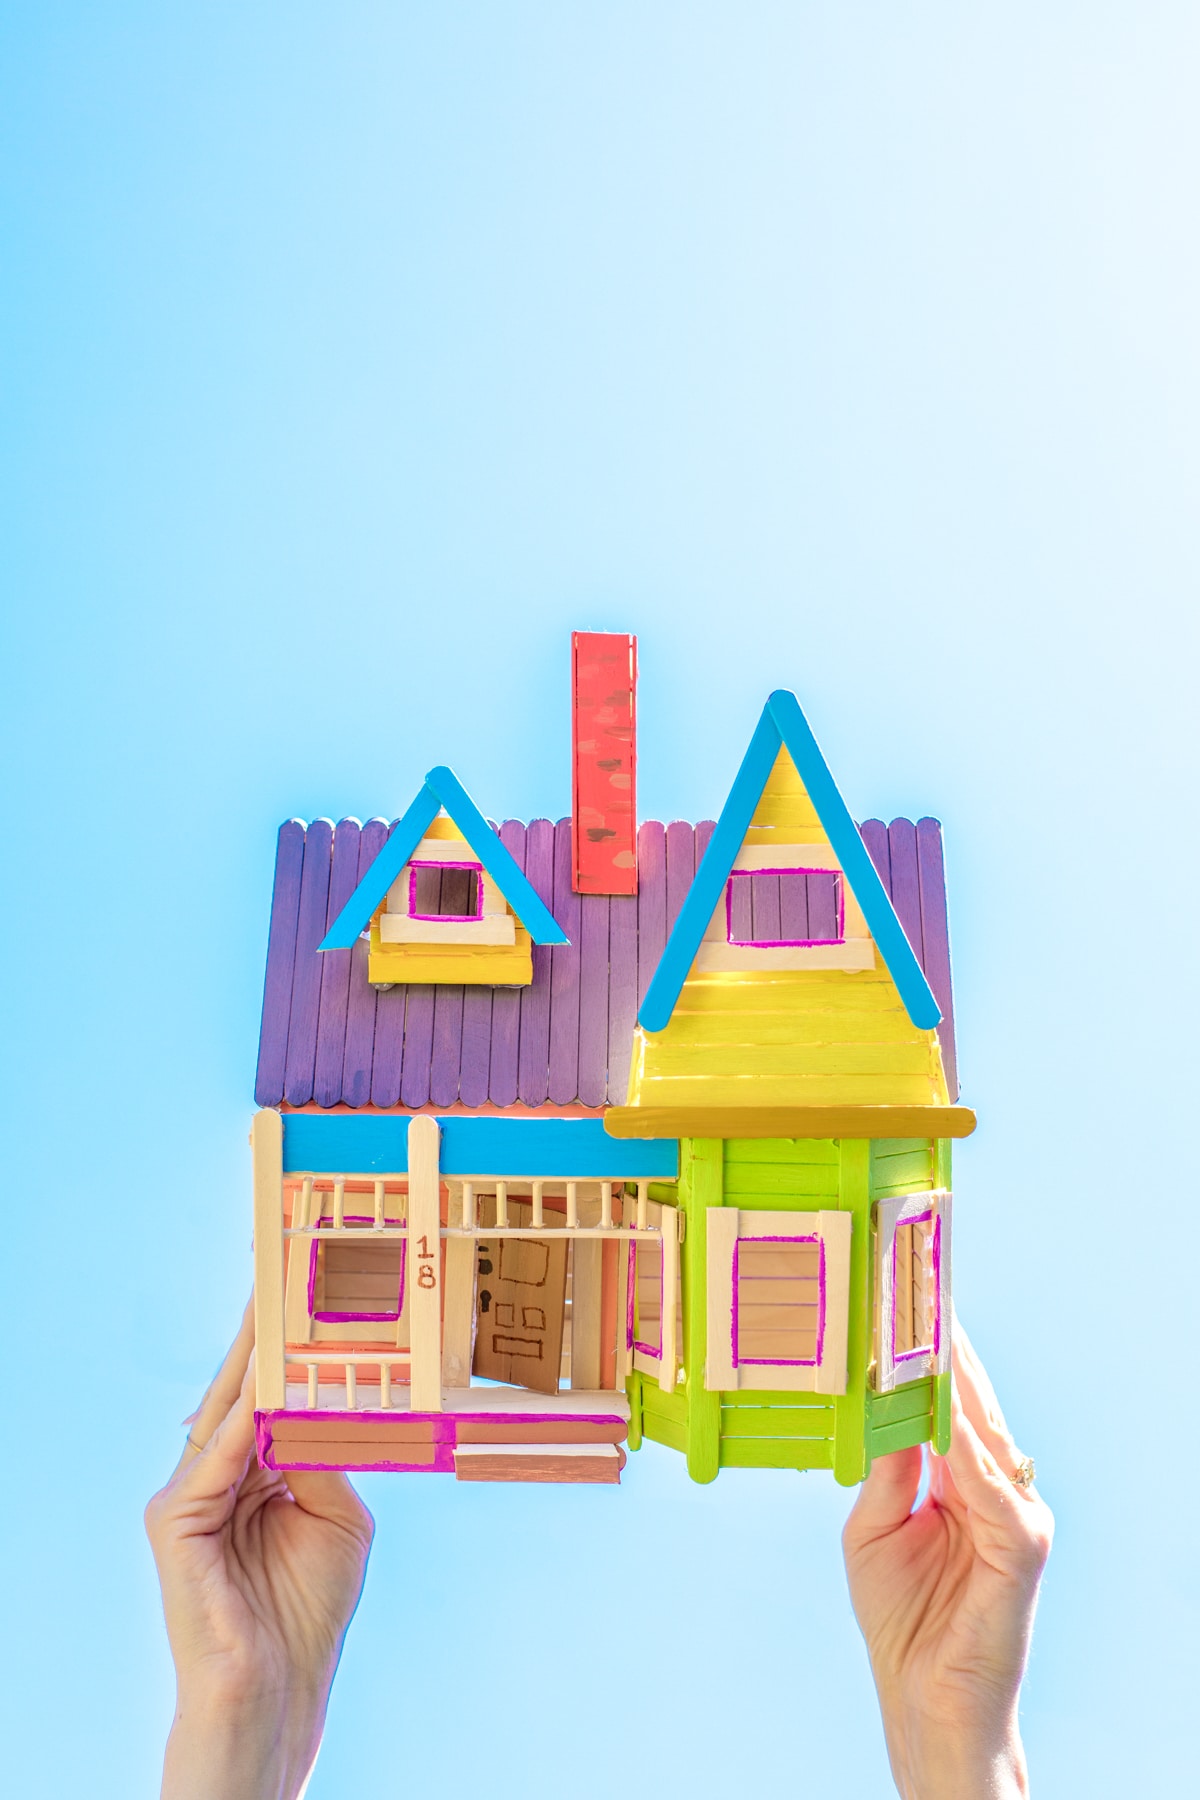 popsicle stick house blueprints